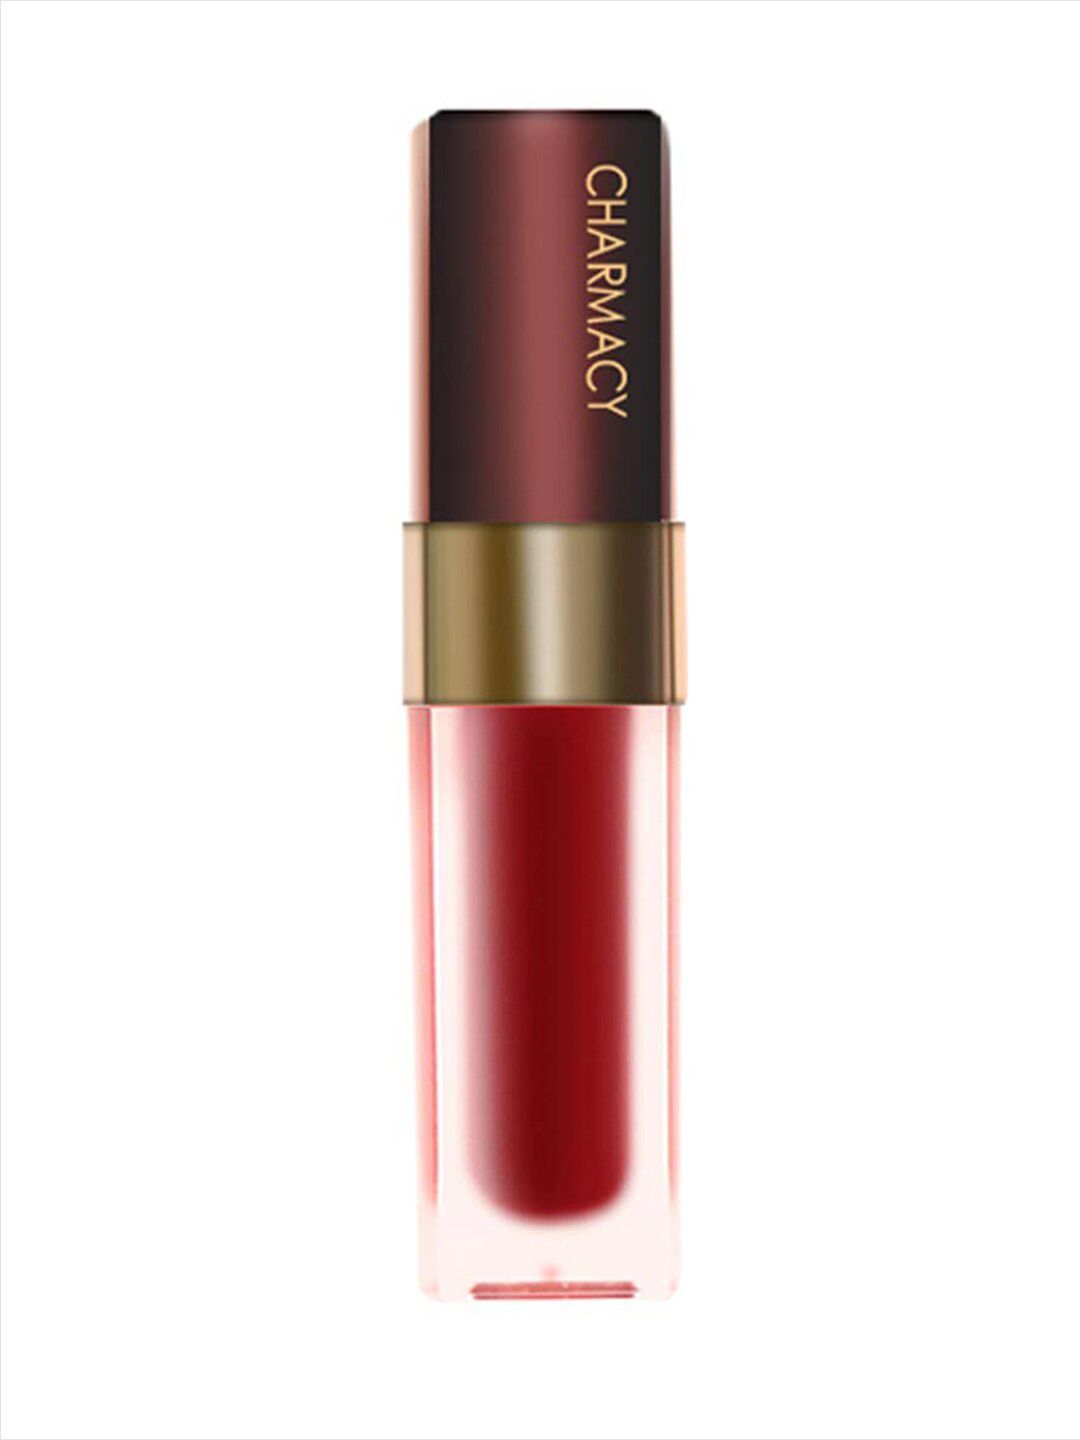 Charmacy Milano Velvet Matte Finish Liquid Lip Gloss - Flamence Red 35 Price in India